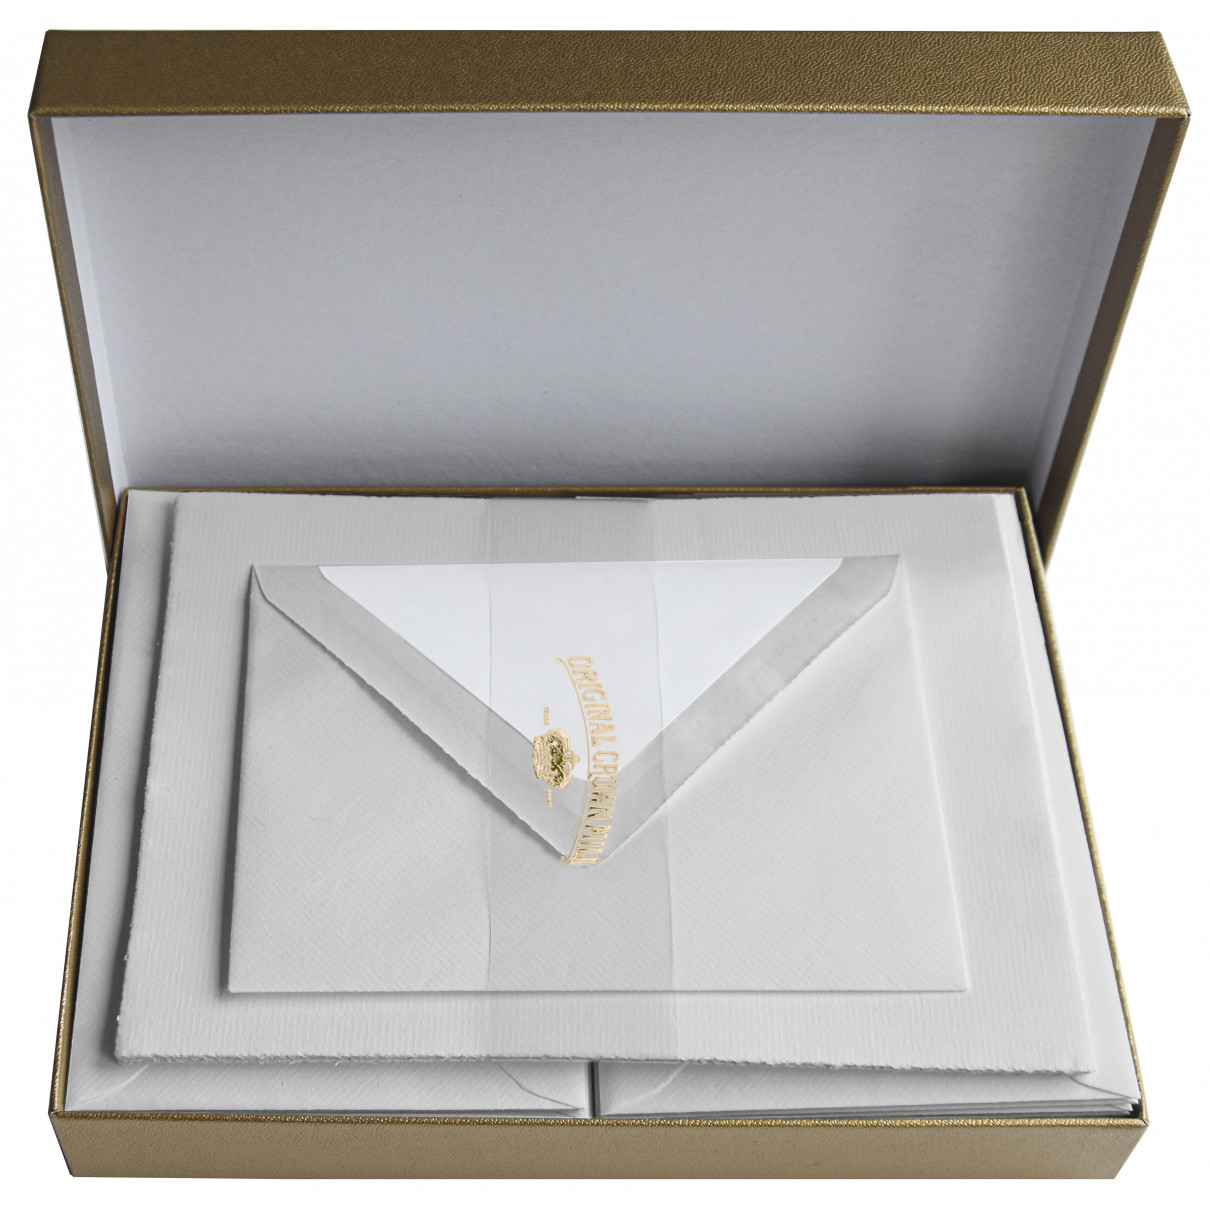 Crown Mill Golden Line C6 100gsm Set of 25 Sheets and Envelopes - Grey